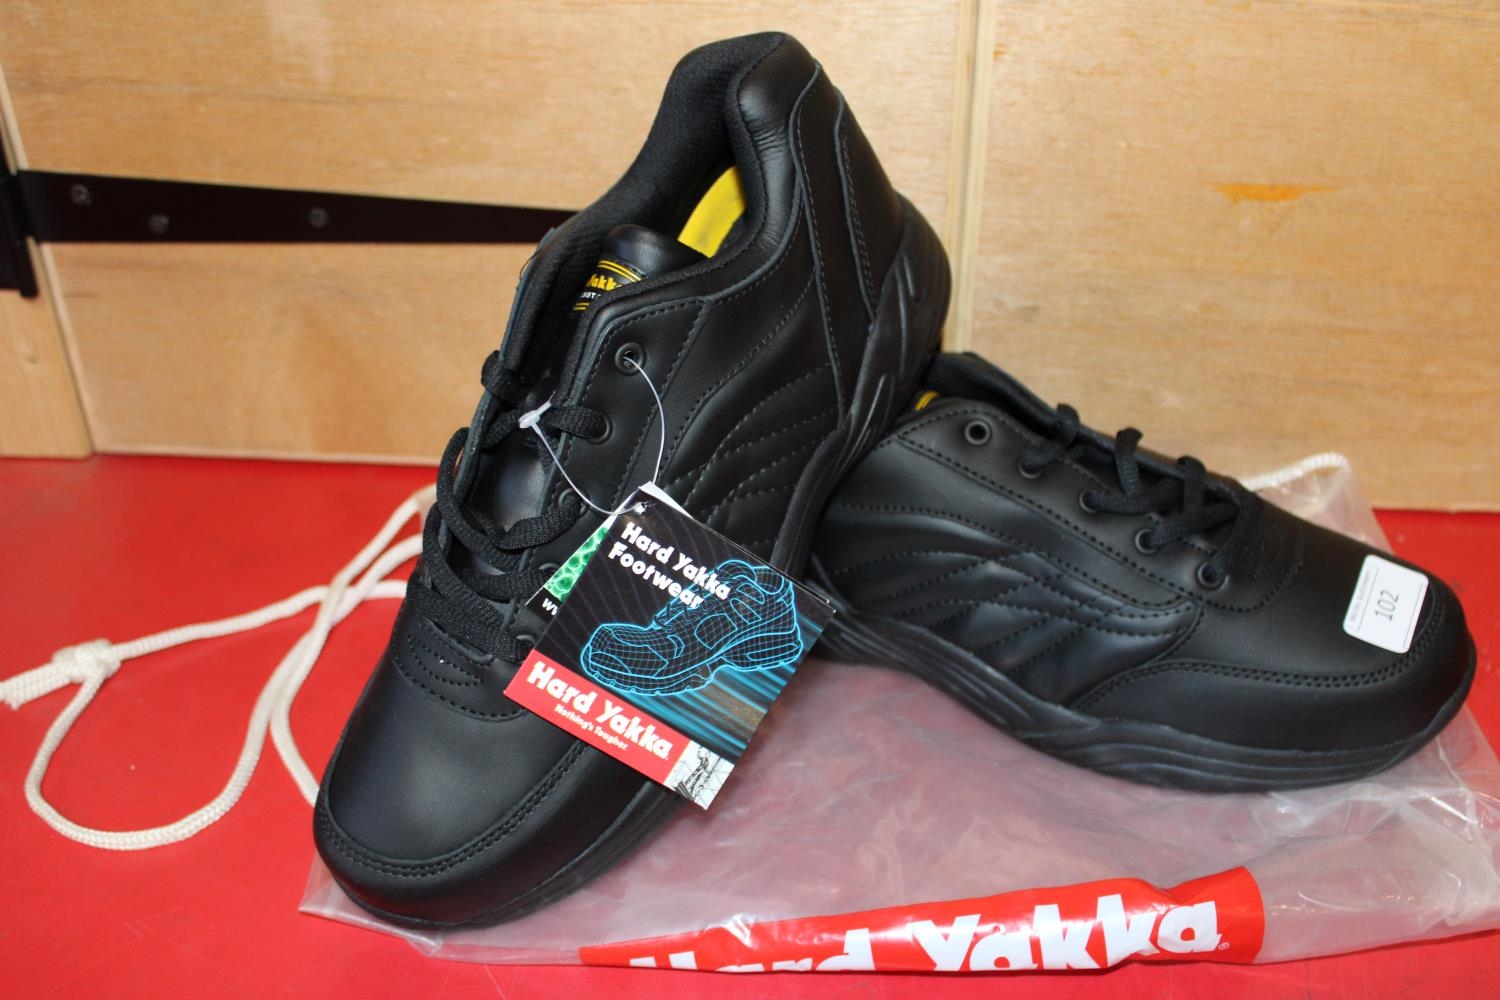 A pair 'Hard Yakka' non slip shoes size 6